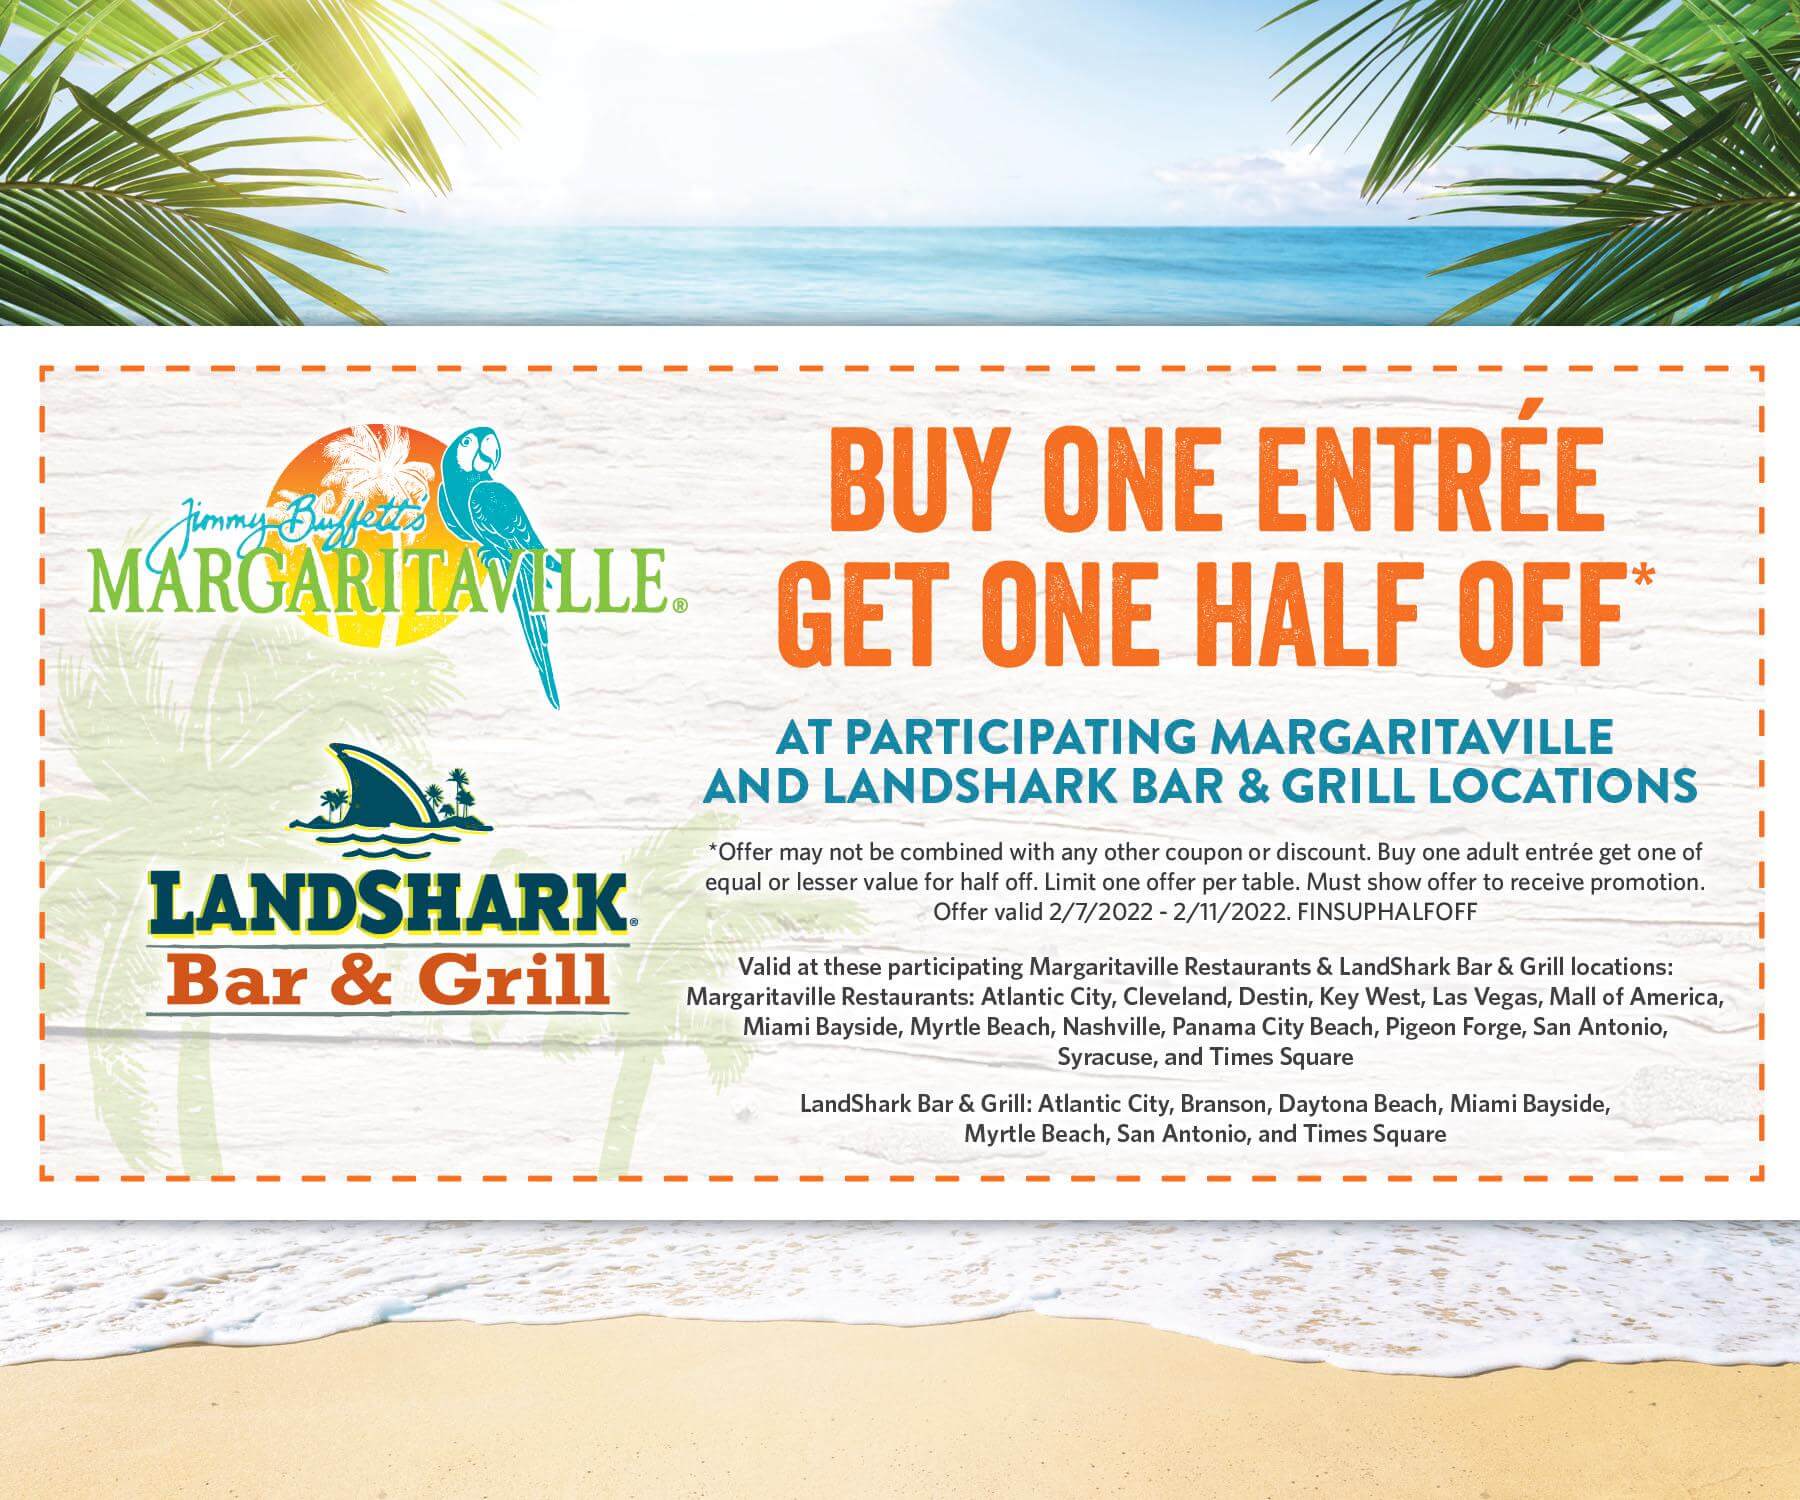 Buy One Entrée Get One Half Off* at participating Margaritaville Restaurants and LandShark Bar & Grill Locations